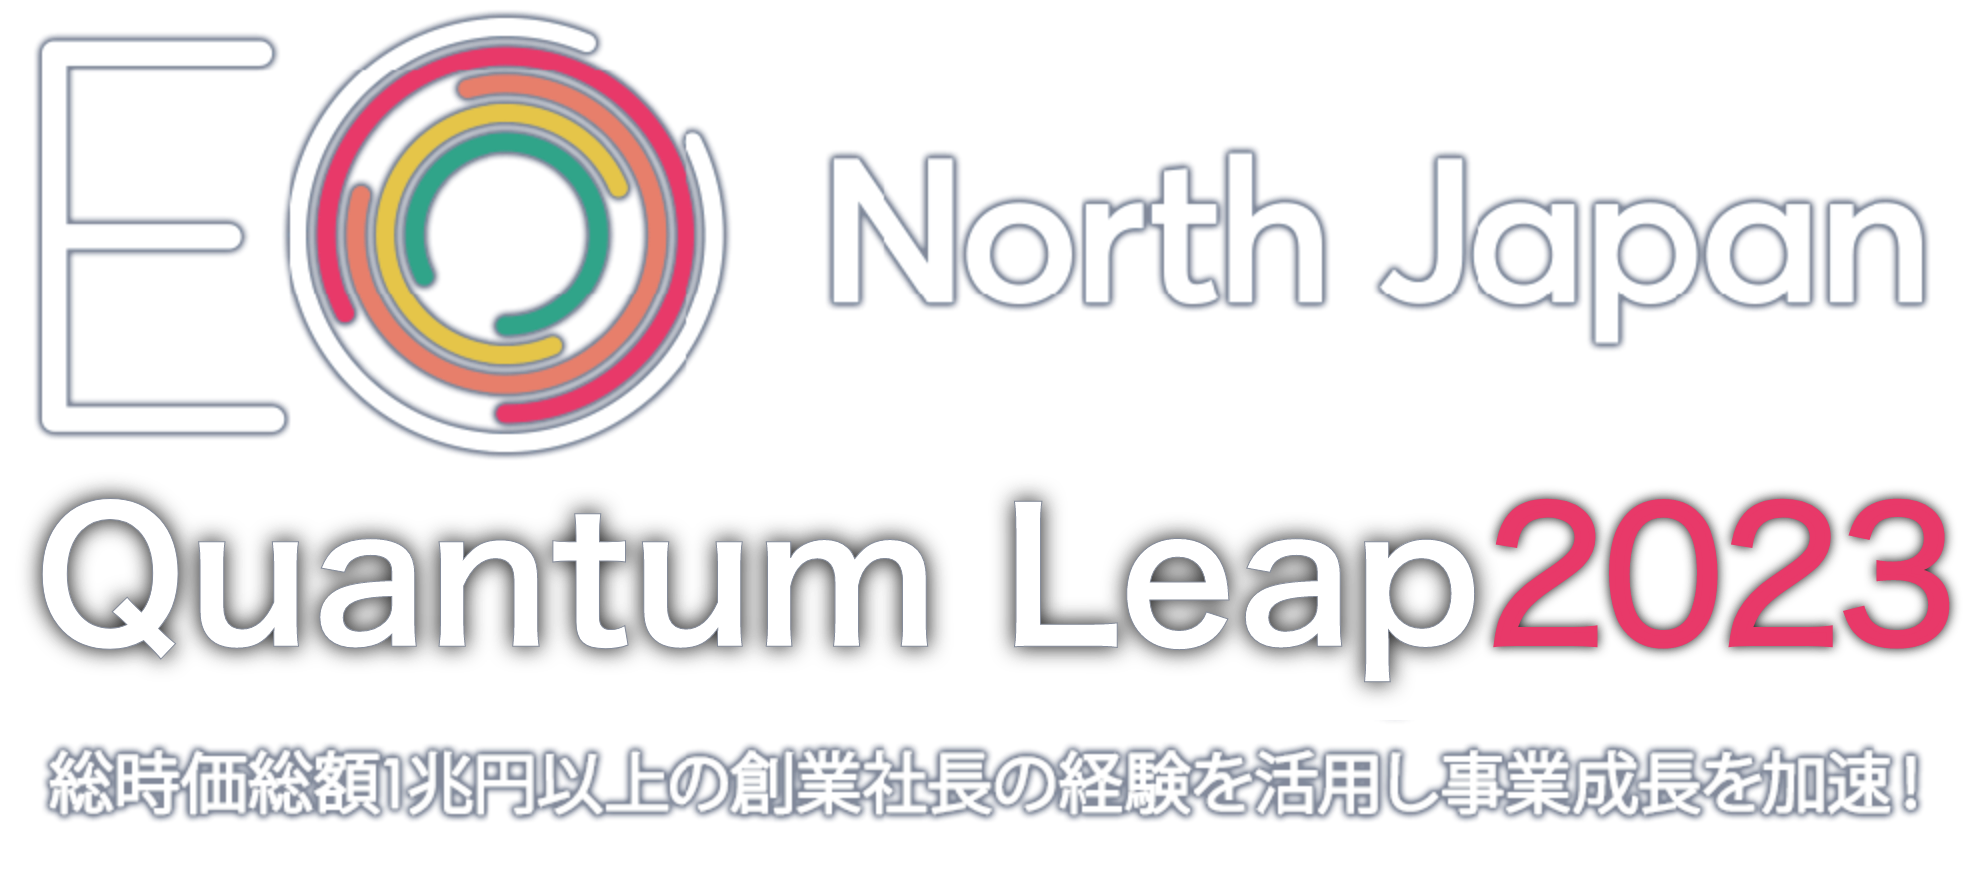 EO North Japan QuantumLeap2023　総時価総額1兆円以上の創業社長の経験を活用し事業成長を加速！〜